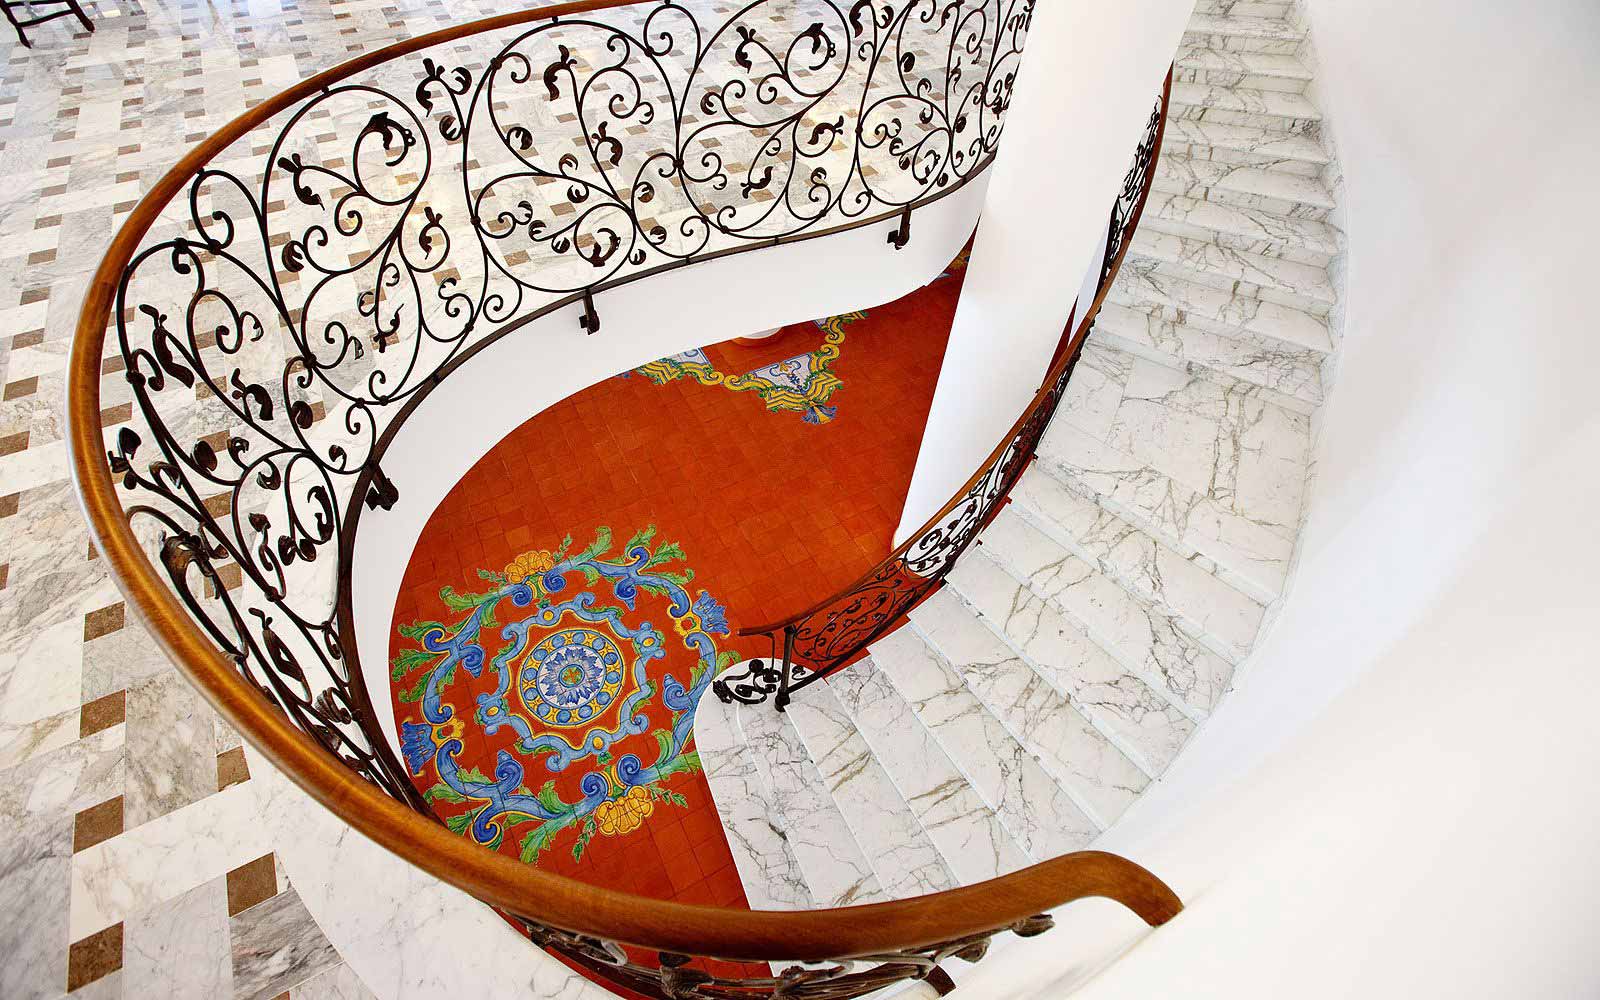 Internal staircase at the Grand Hotel La Favorita